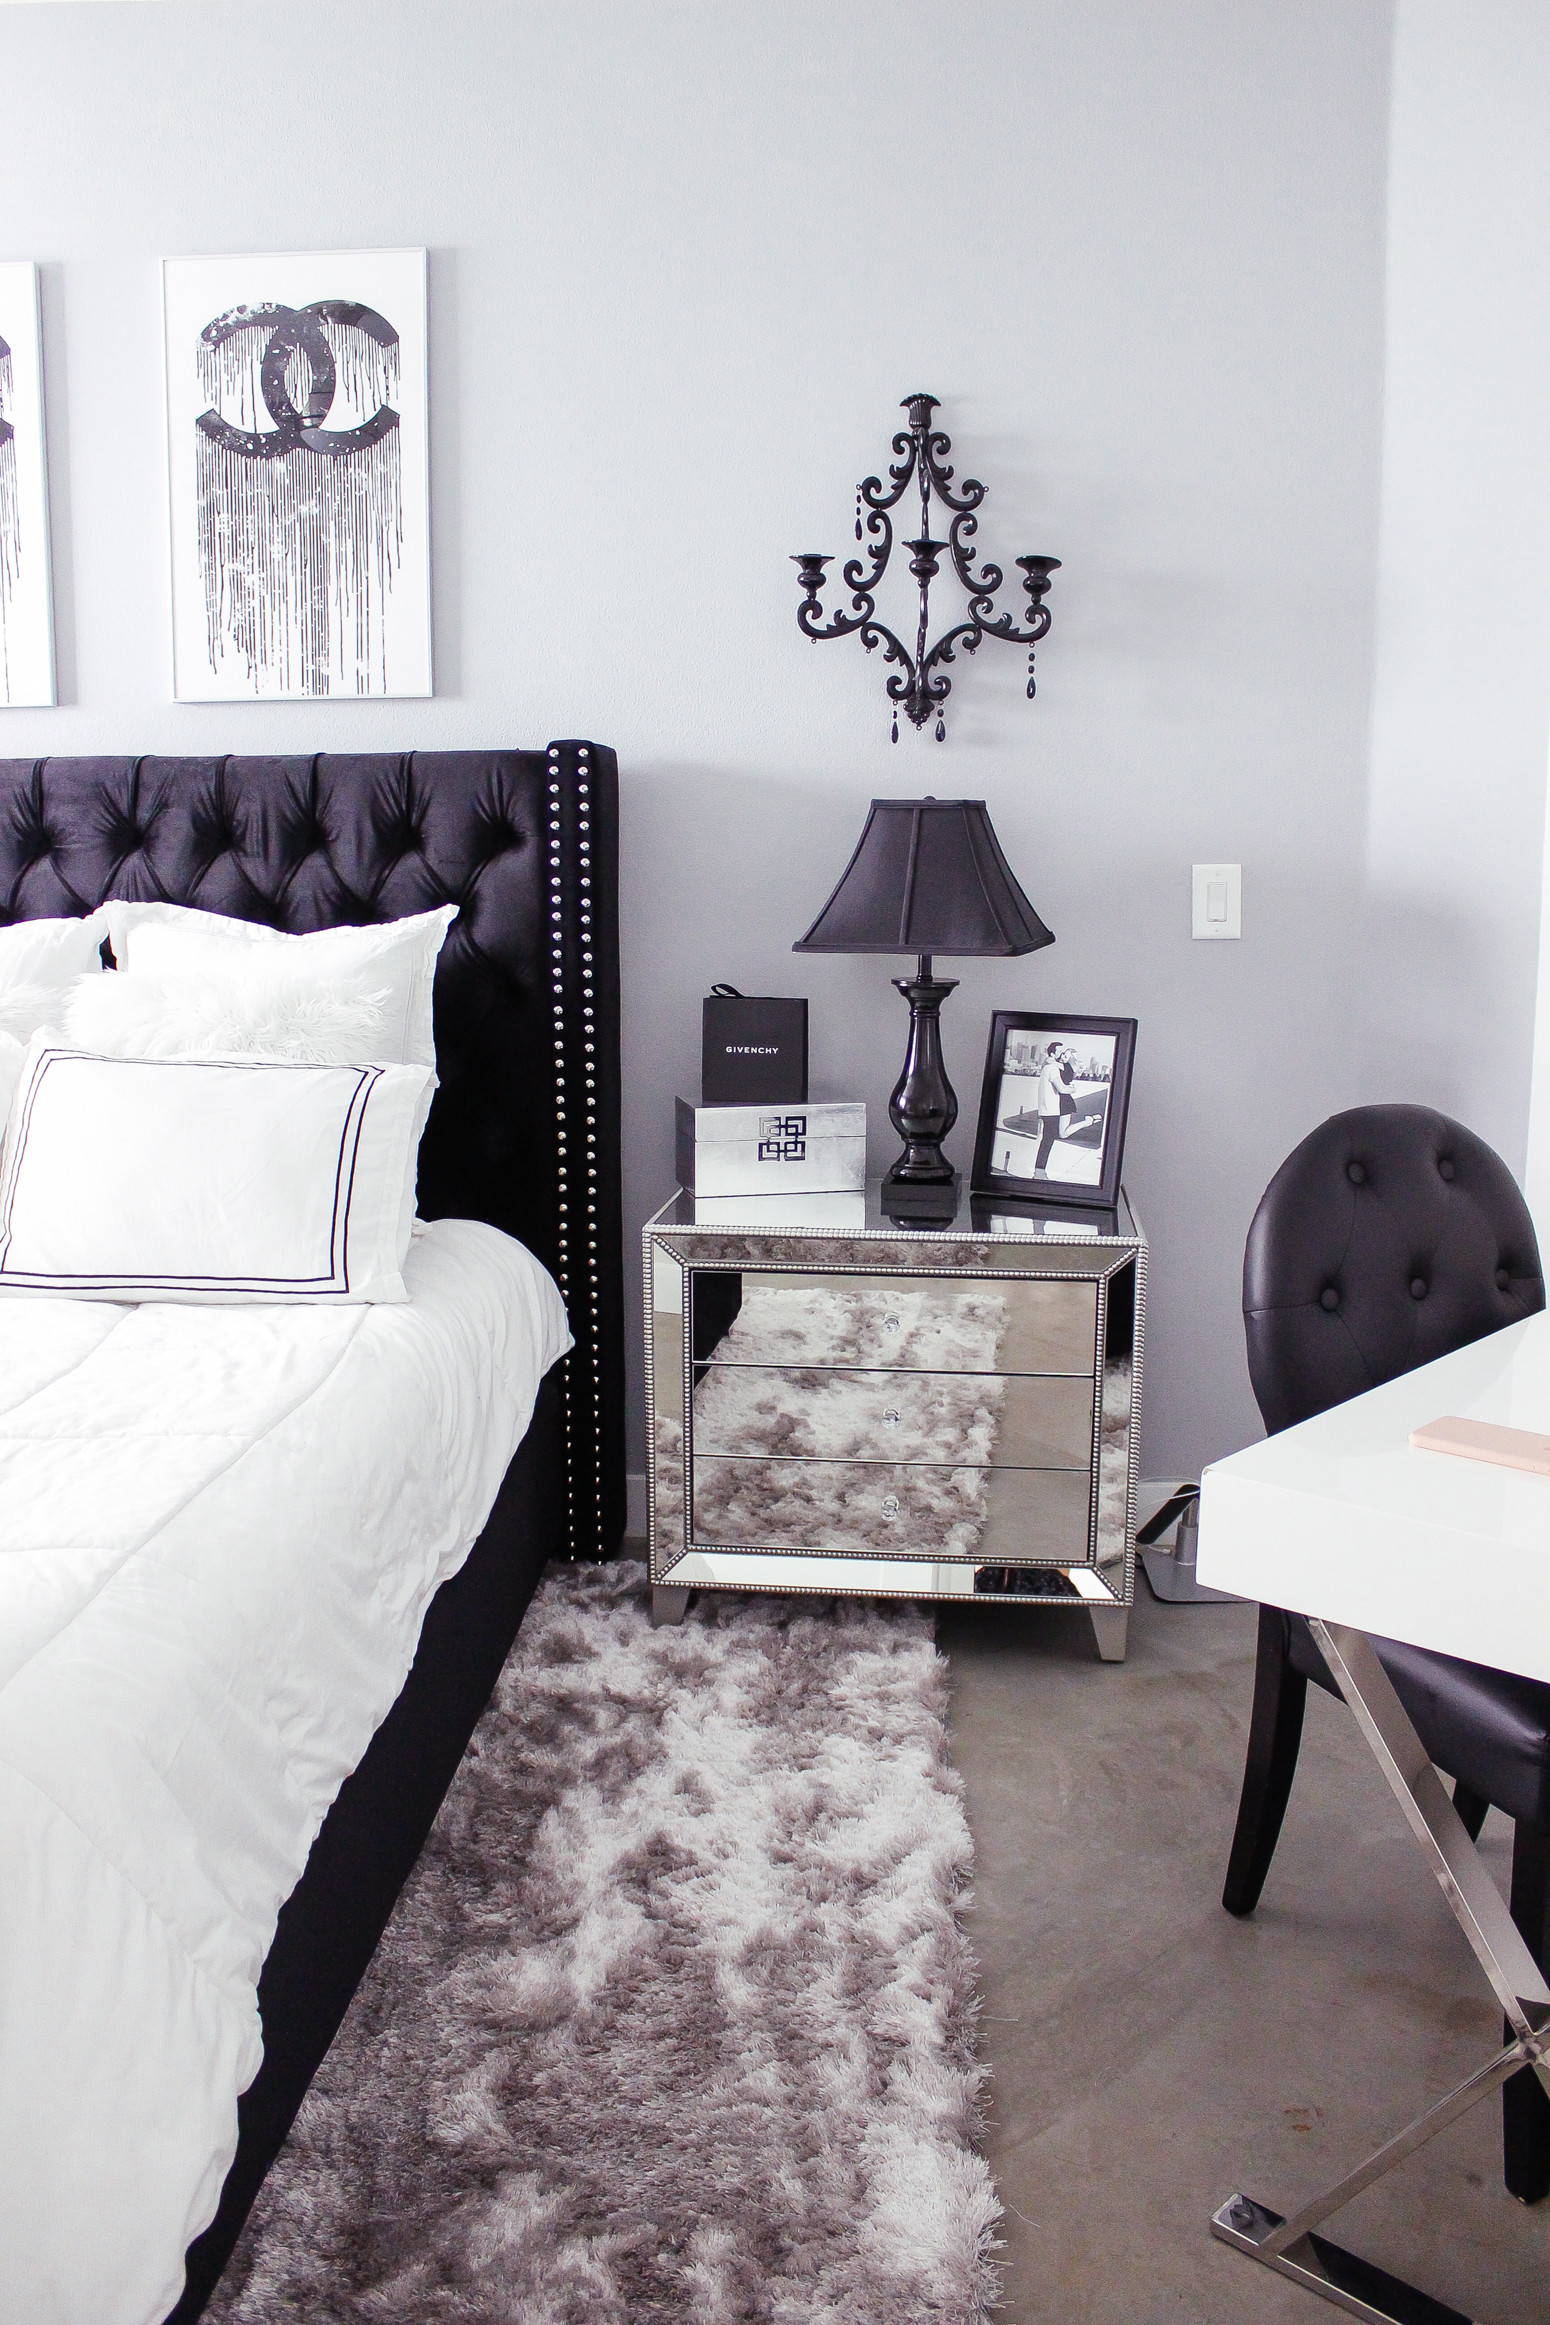 Glam Bedroom Decor
 Black & White Bedroom Decor Reveal